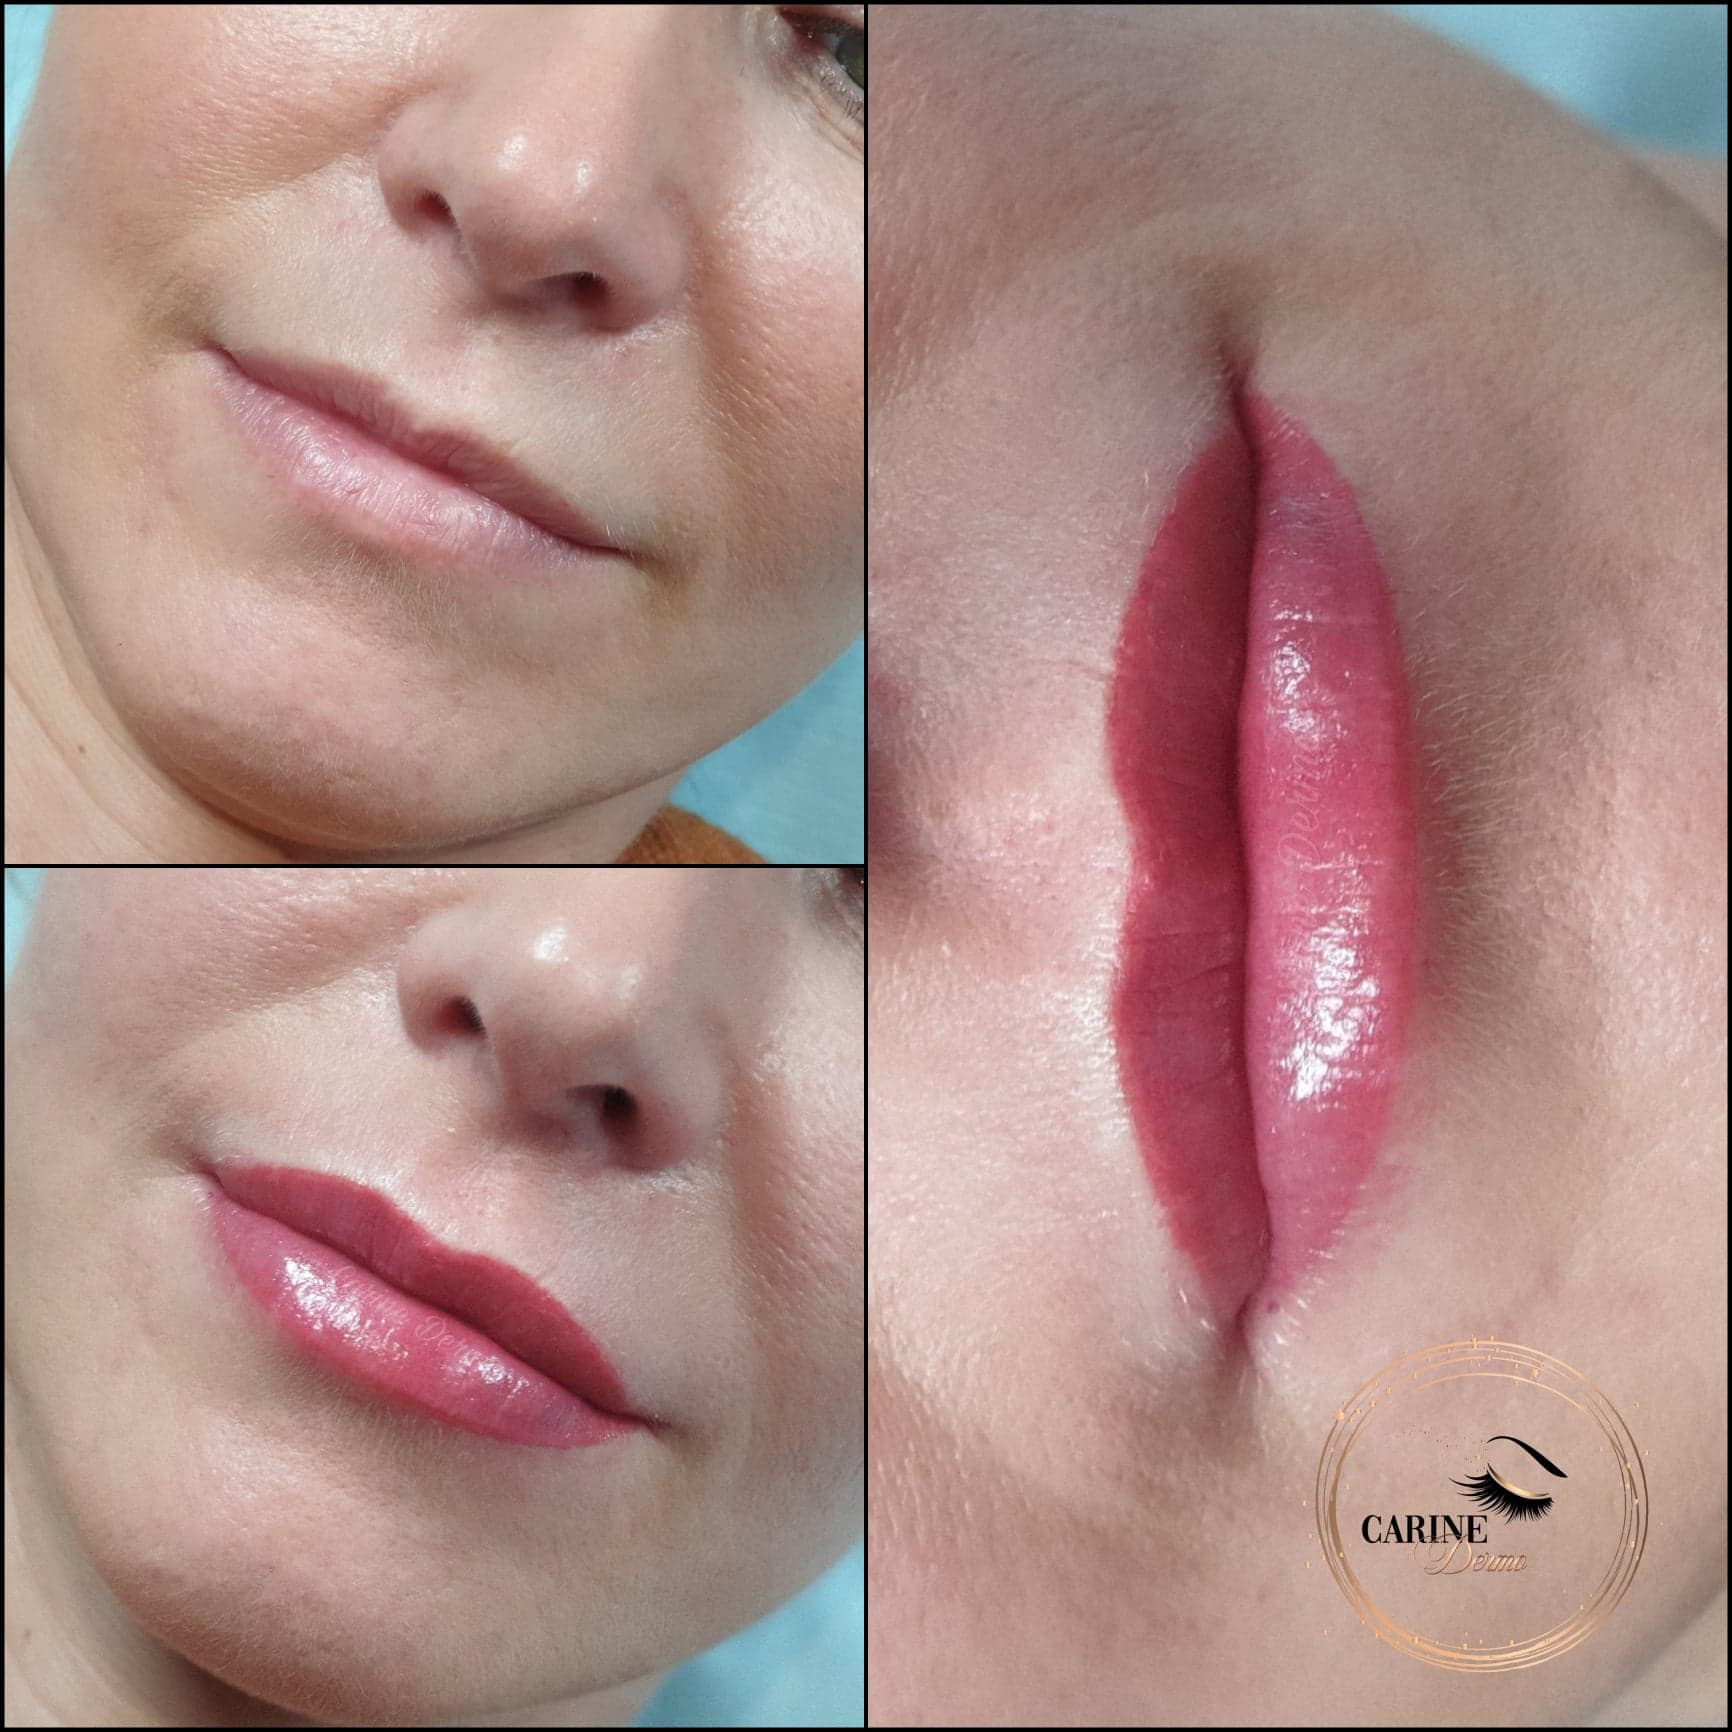 Carine Dermo - maquillage permanent - lèvres - bouche - Reims - Saumur